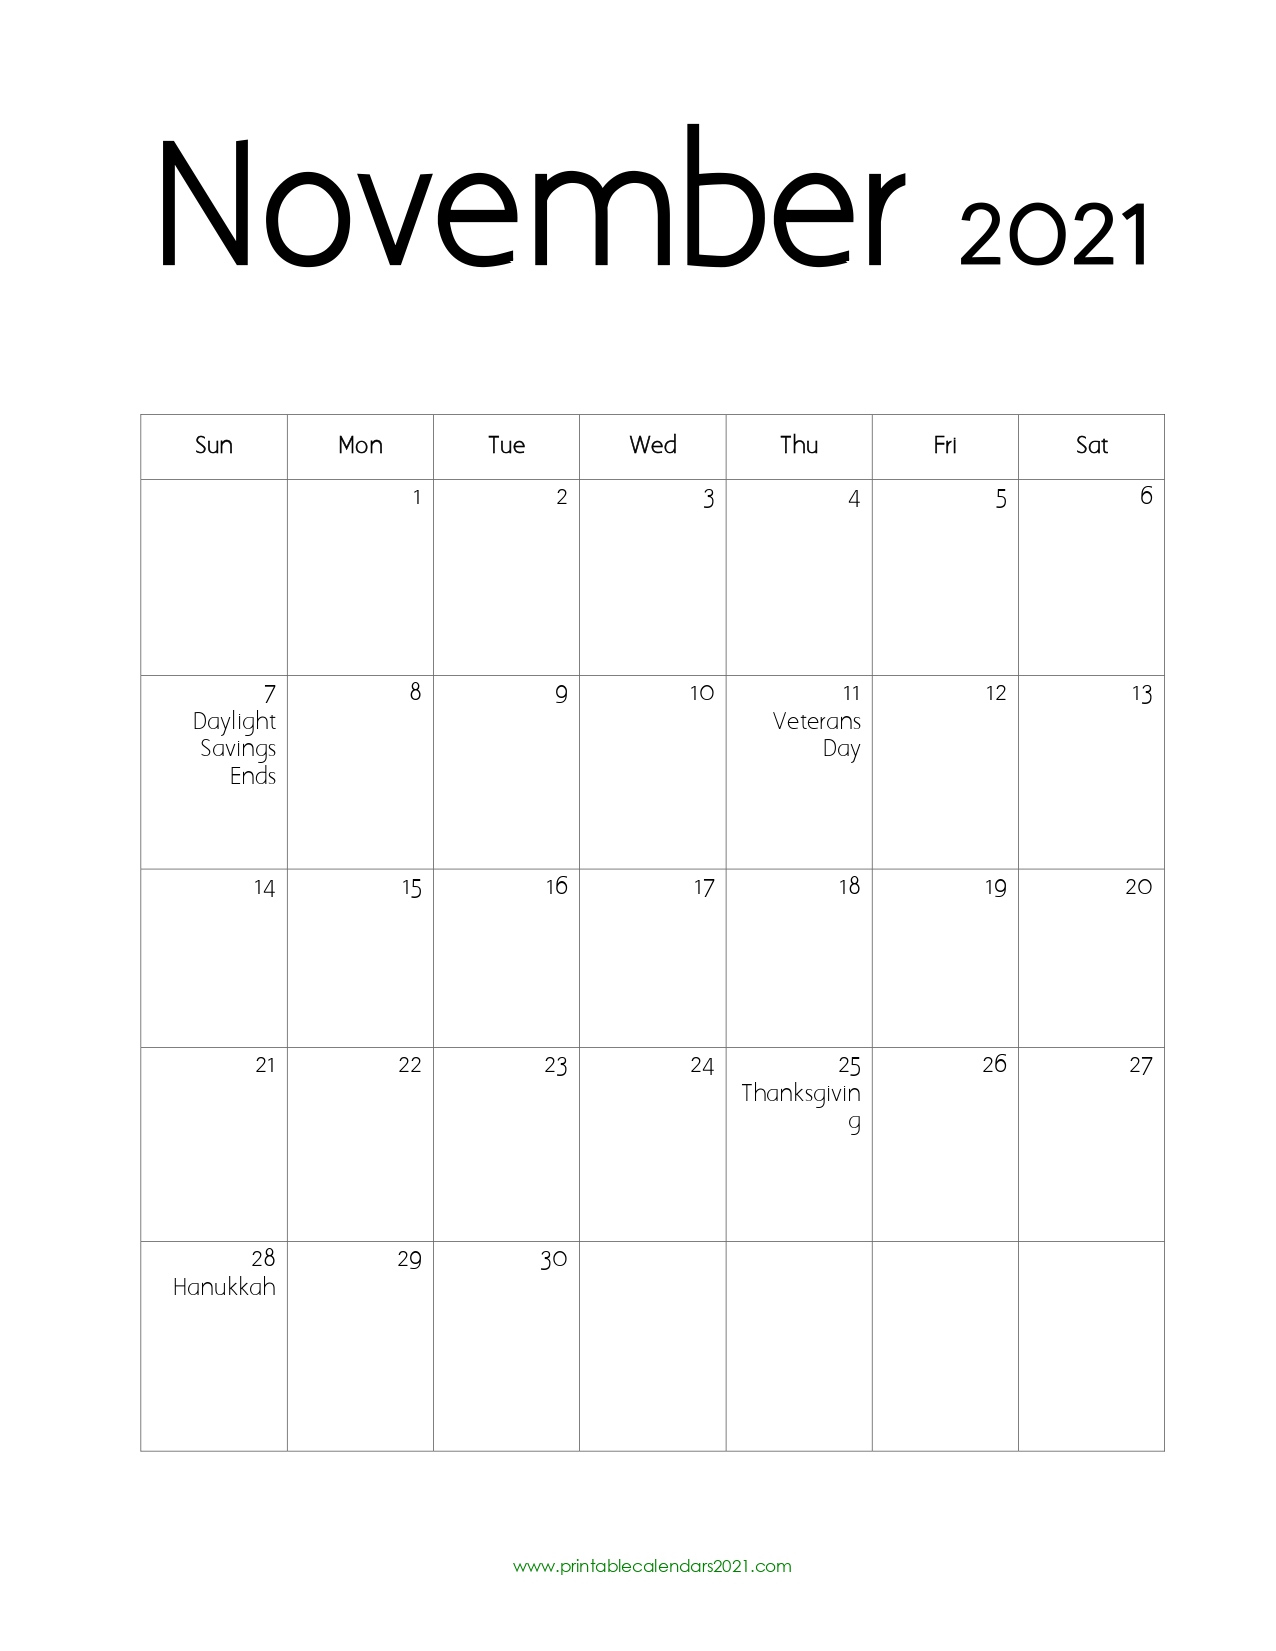 44+ November 2021 Calendar Printable, November 2021 December 2021 Calendar Printable Wiki